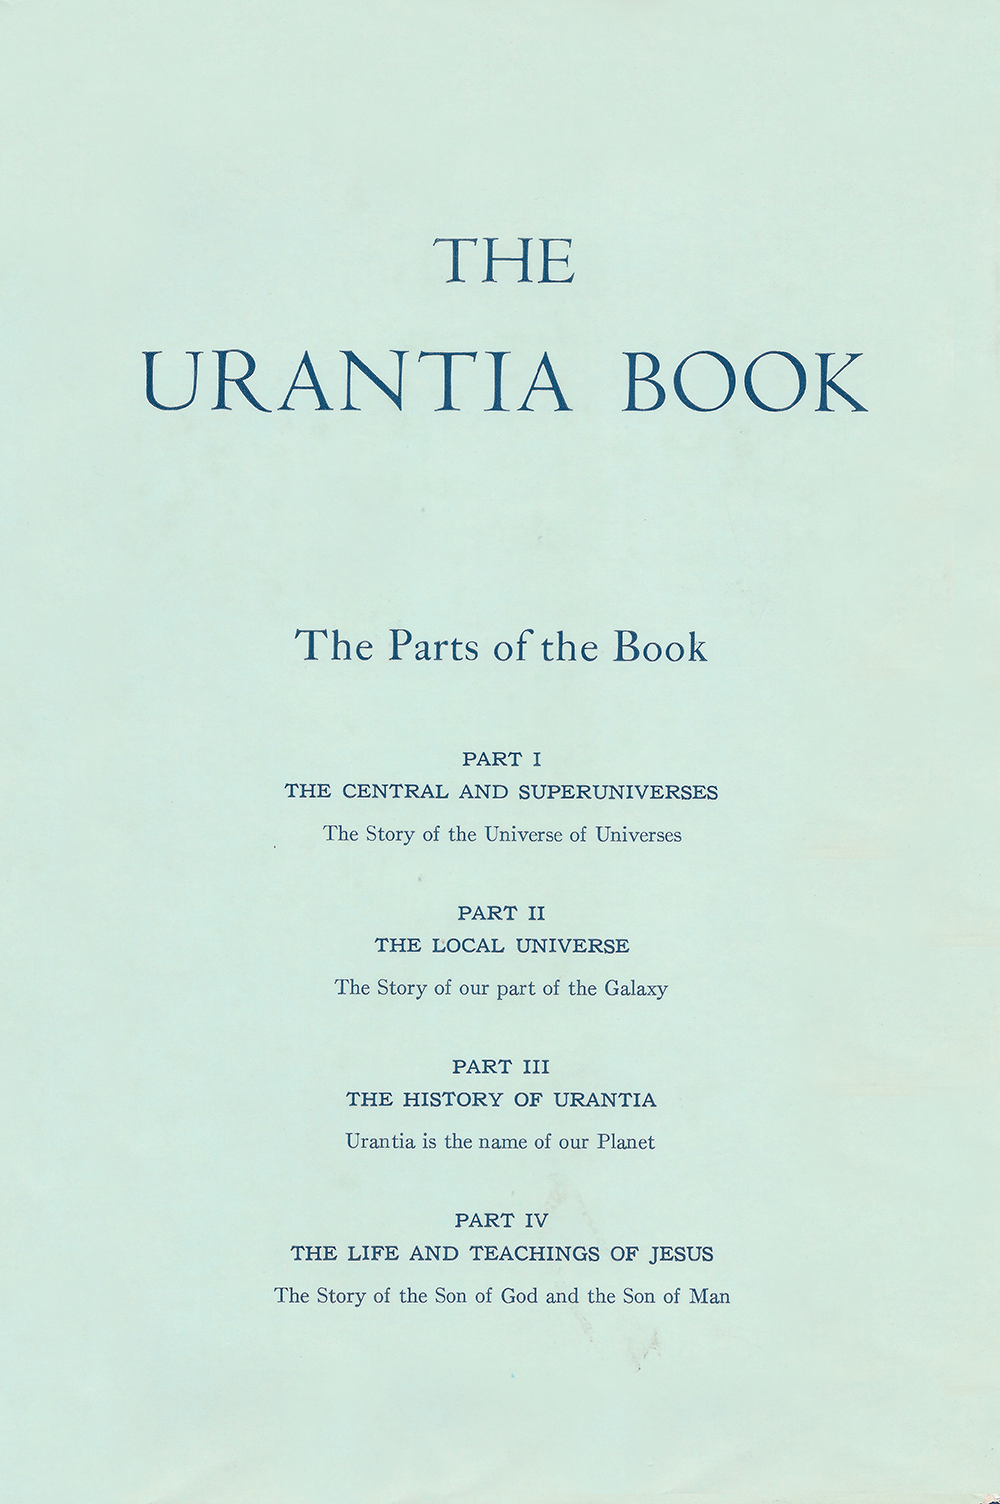 2002 The Urantia Book - Replica of 1955 edition